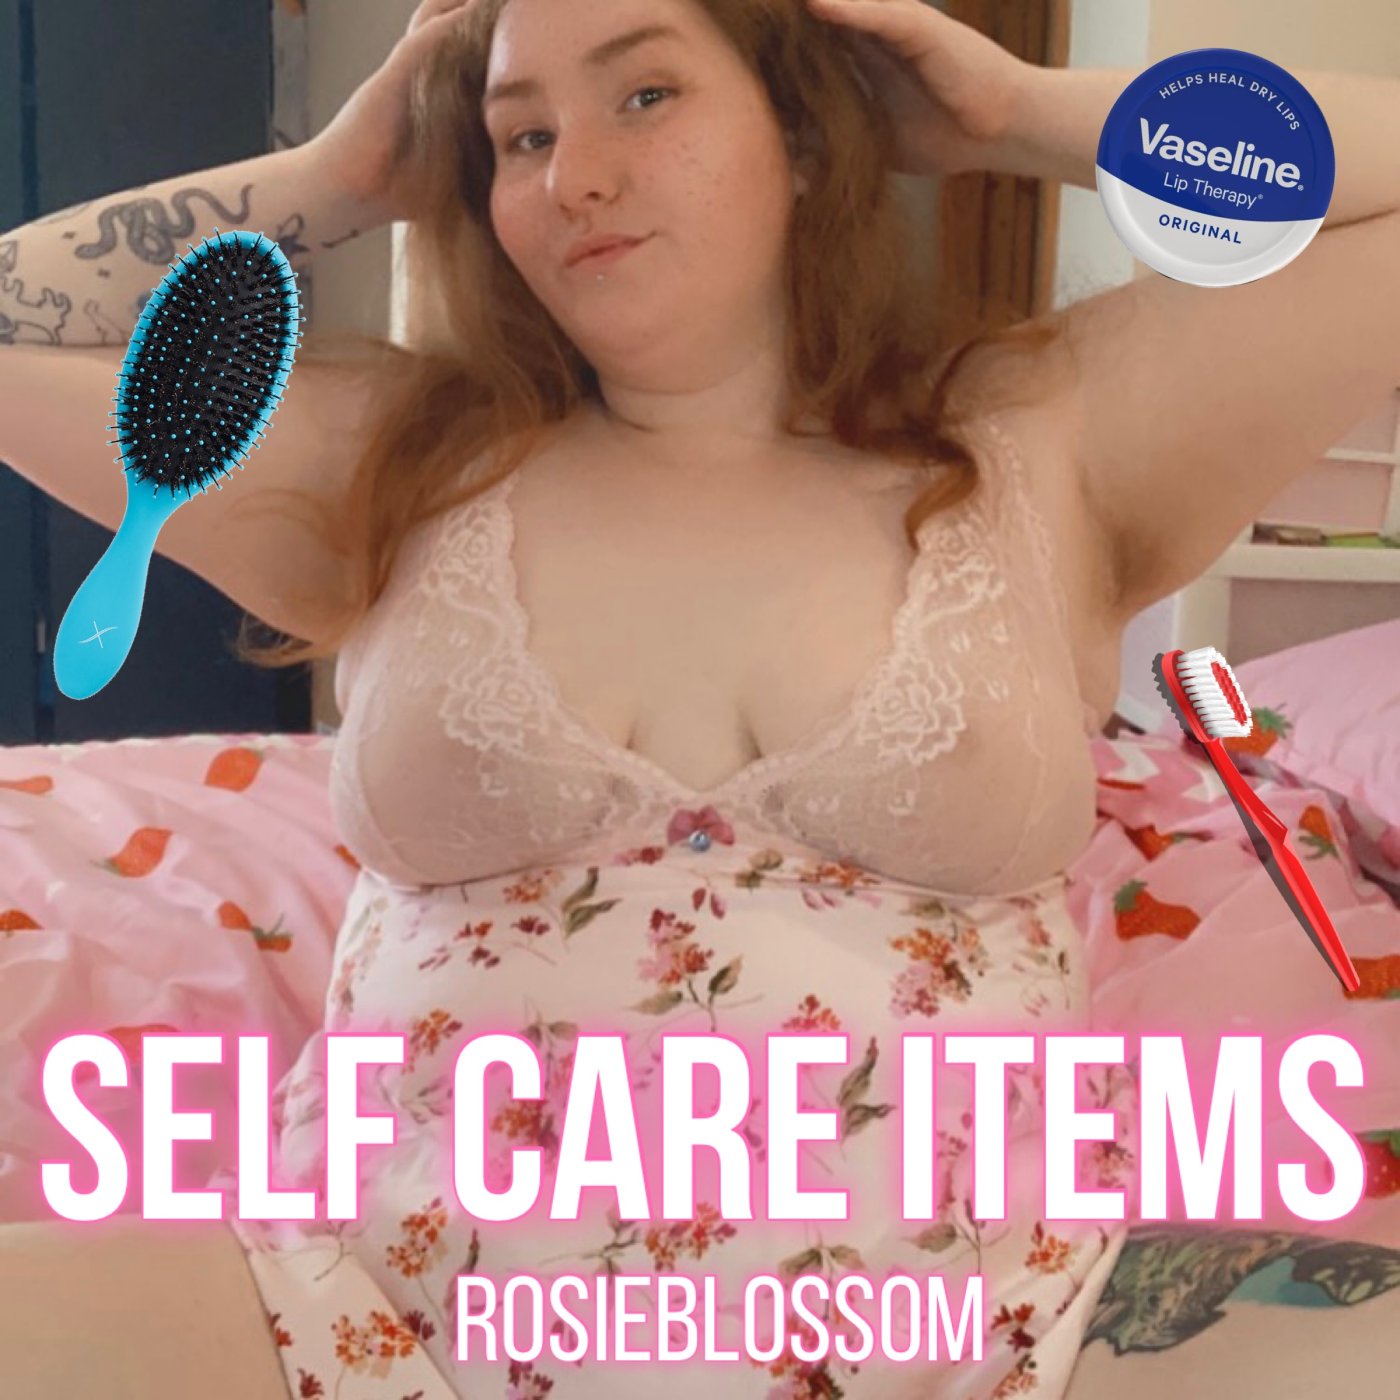 Self Care Items